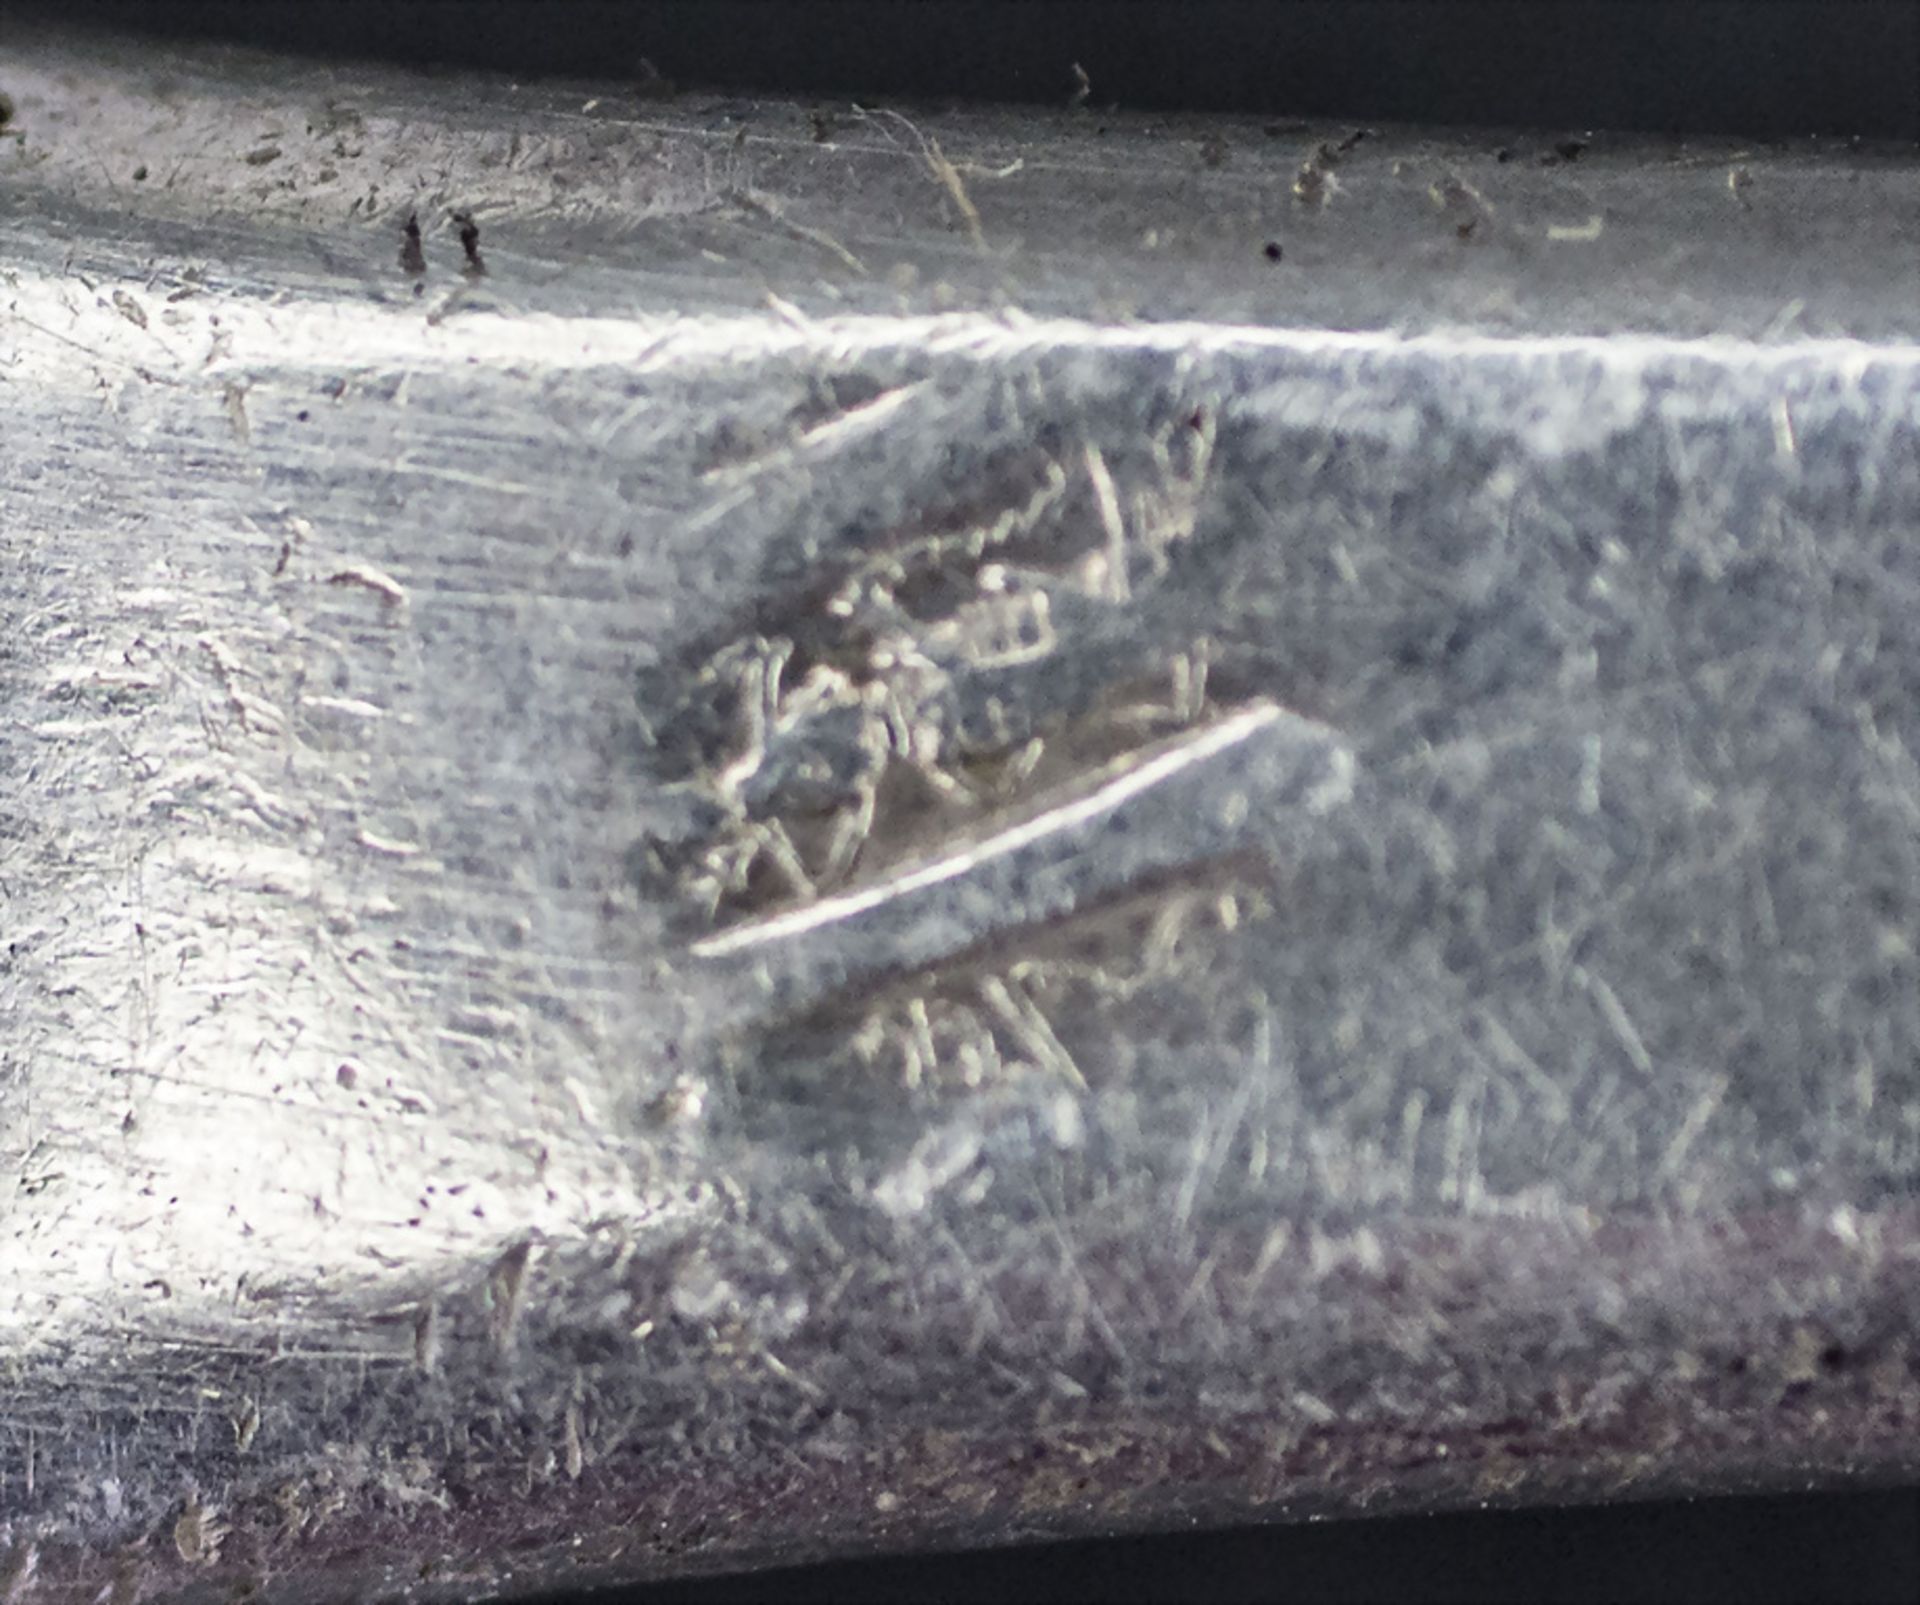 12-tlg. Silberbesteck / A 12-piece set of silver cutlery, Paris, nach 1839 - Image 4 of 7